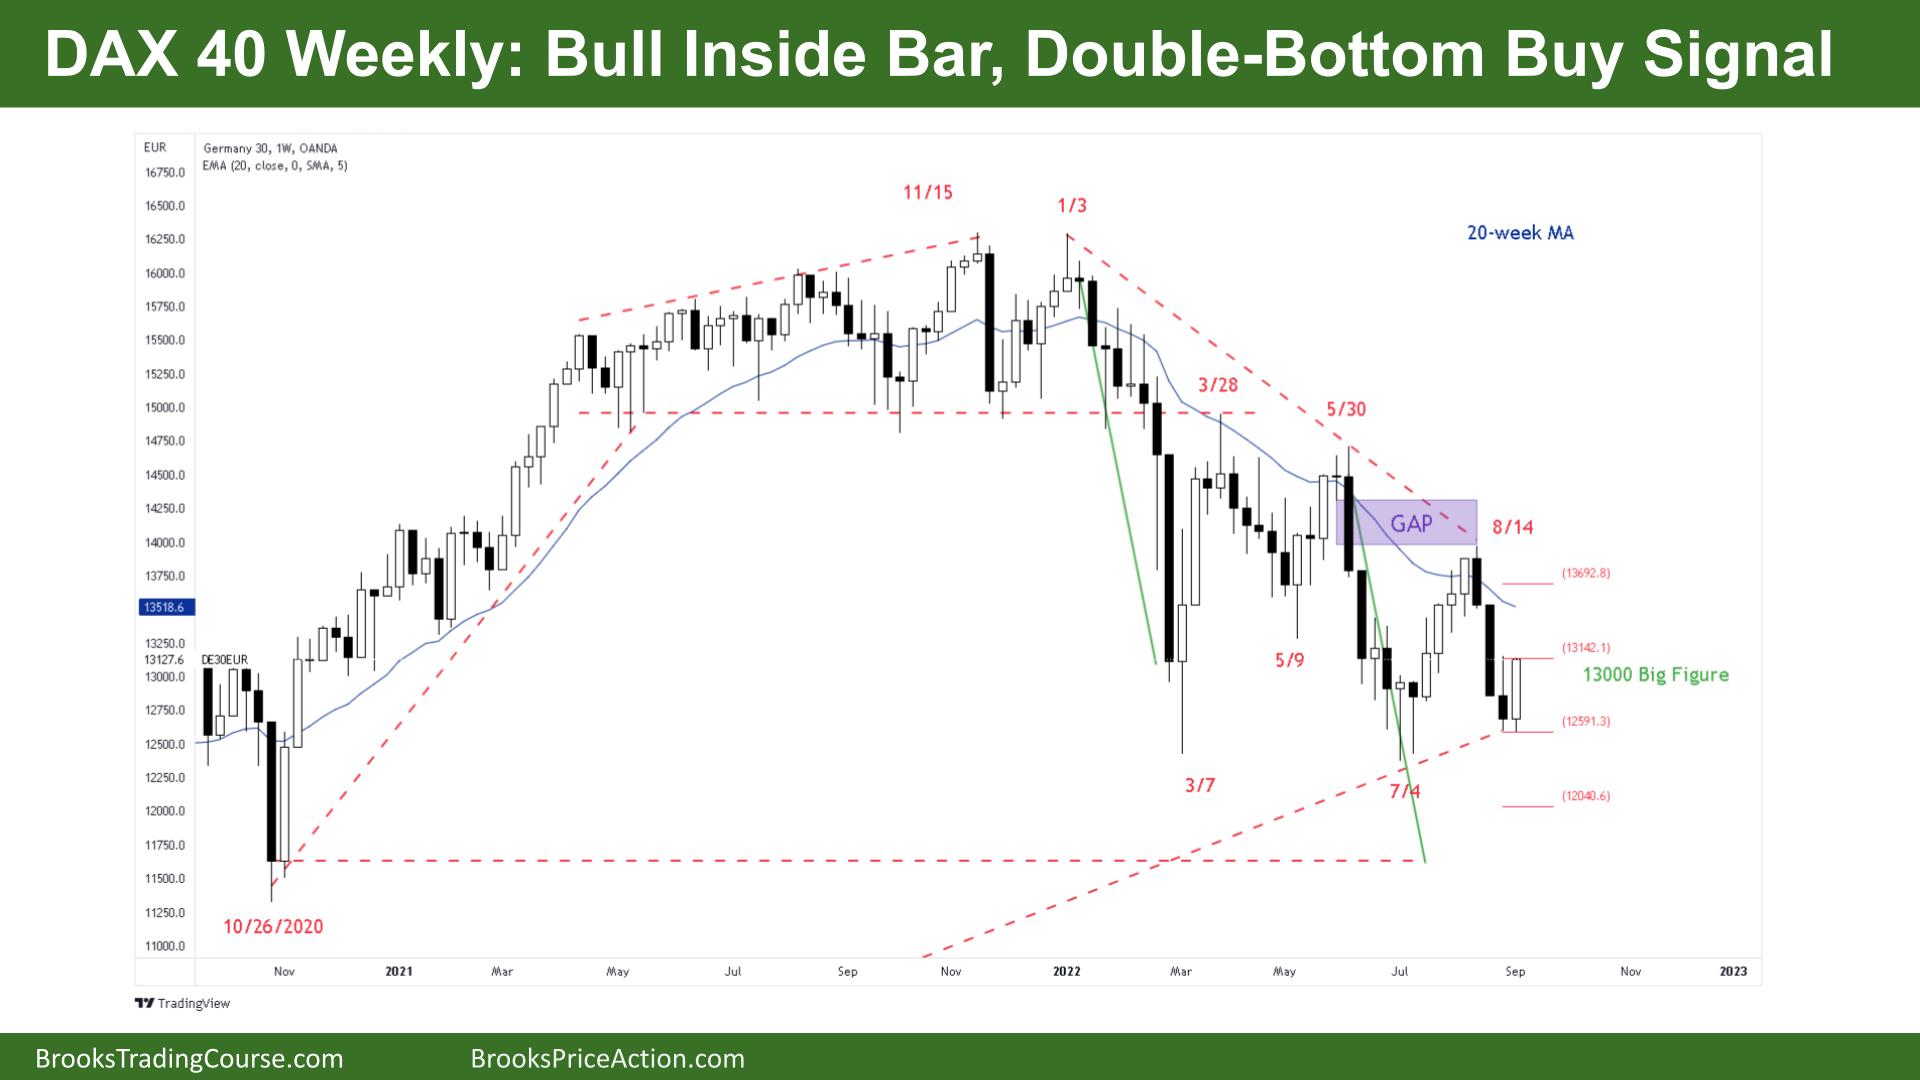 DAX 40 Bull Inside Bar Double Bottom Buy Signal